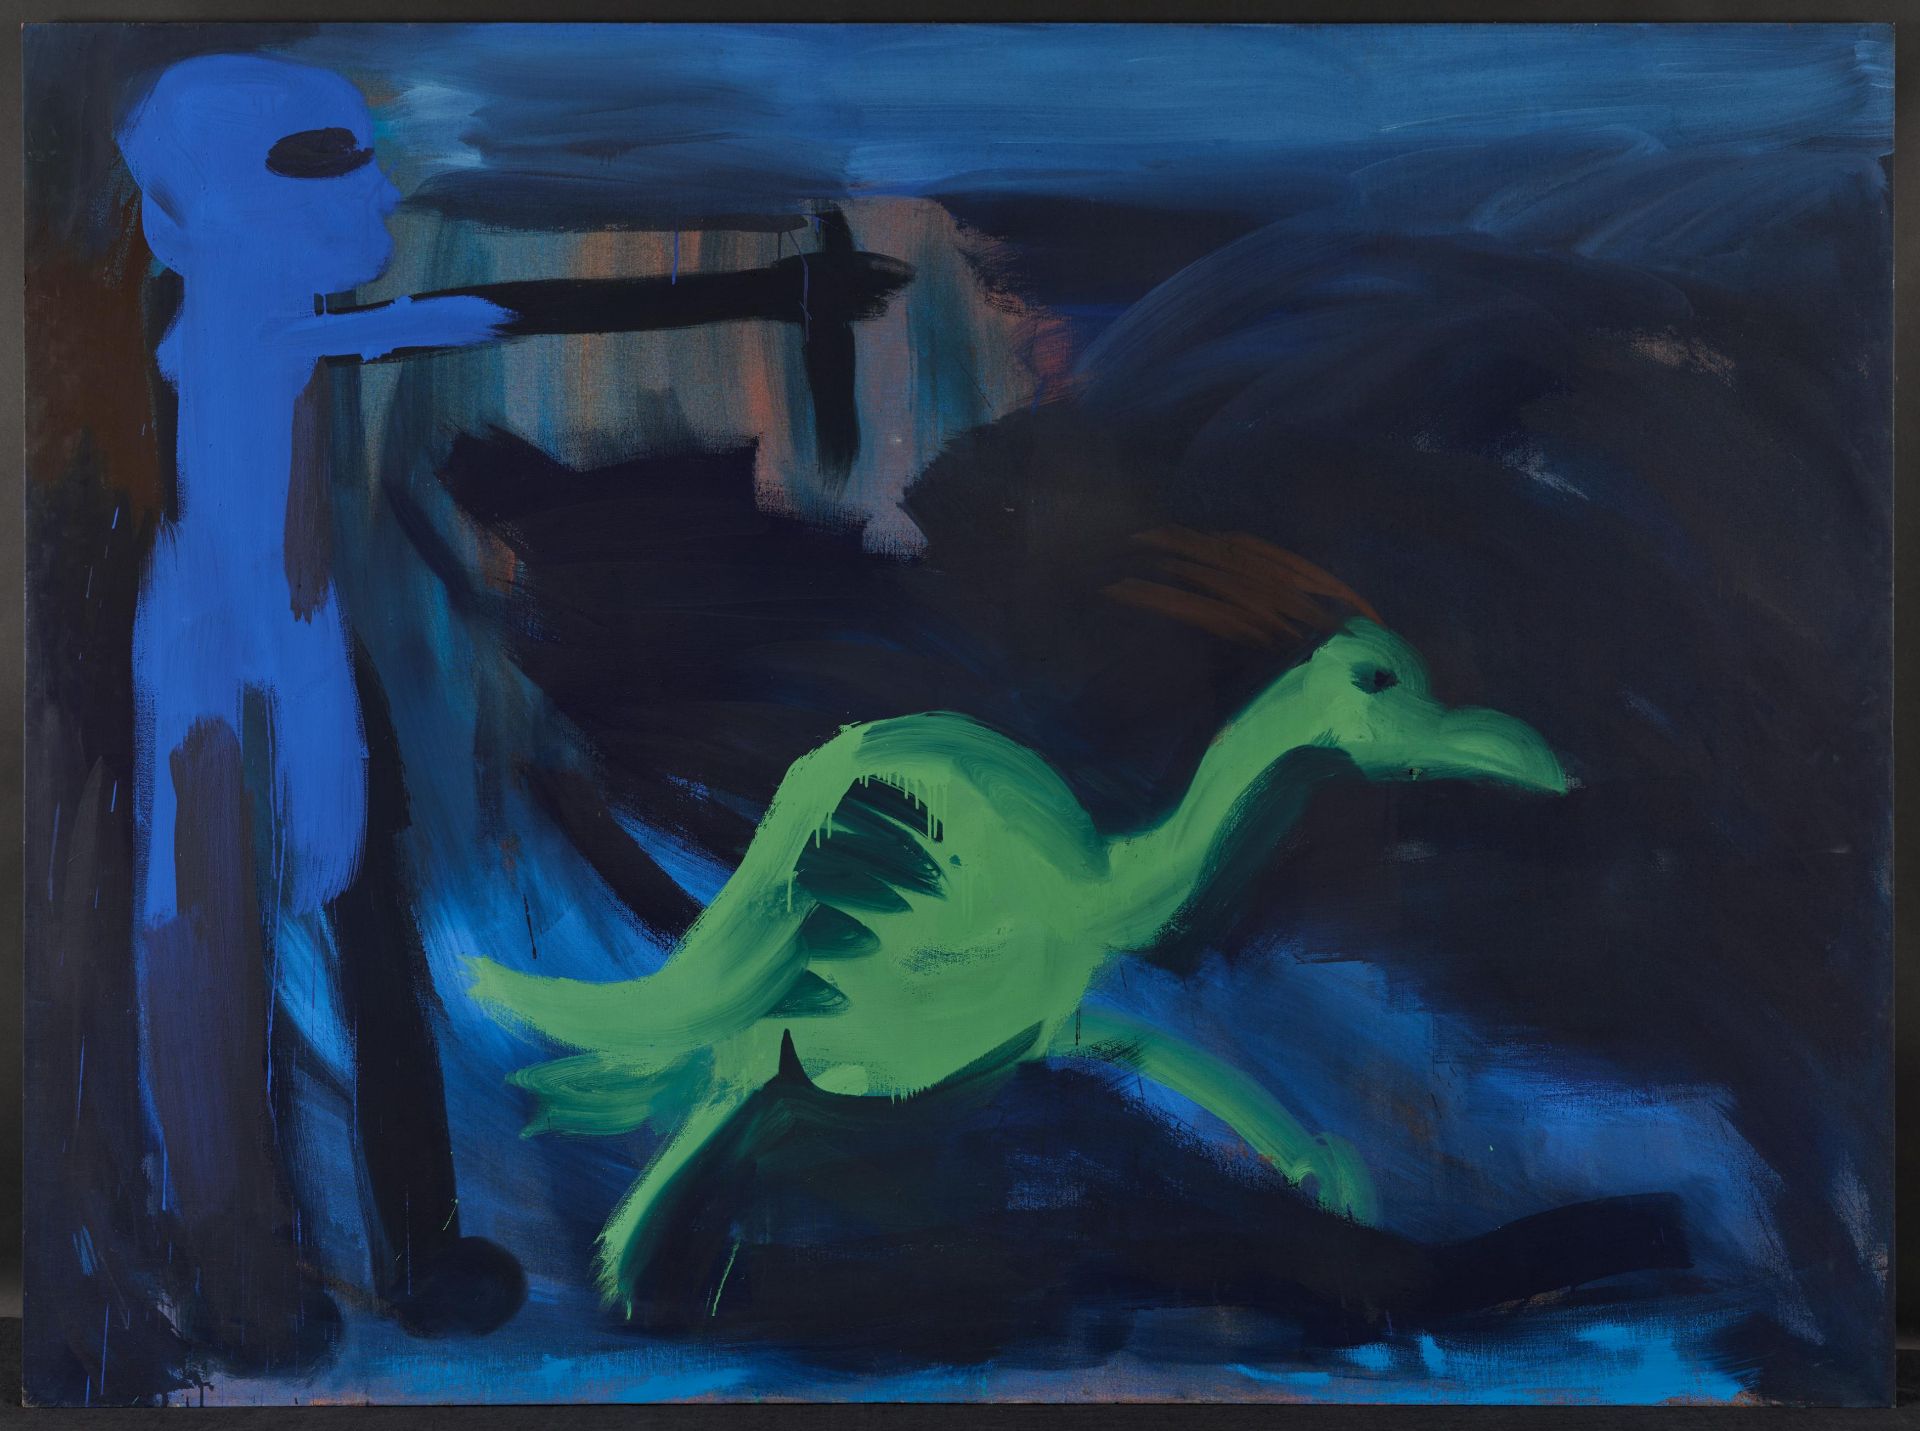 Rainer Fetting: "Boy and bird" - Image 2 of 4